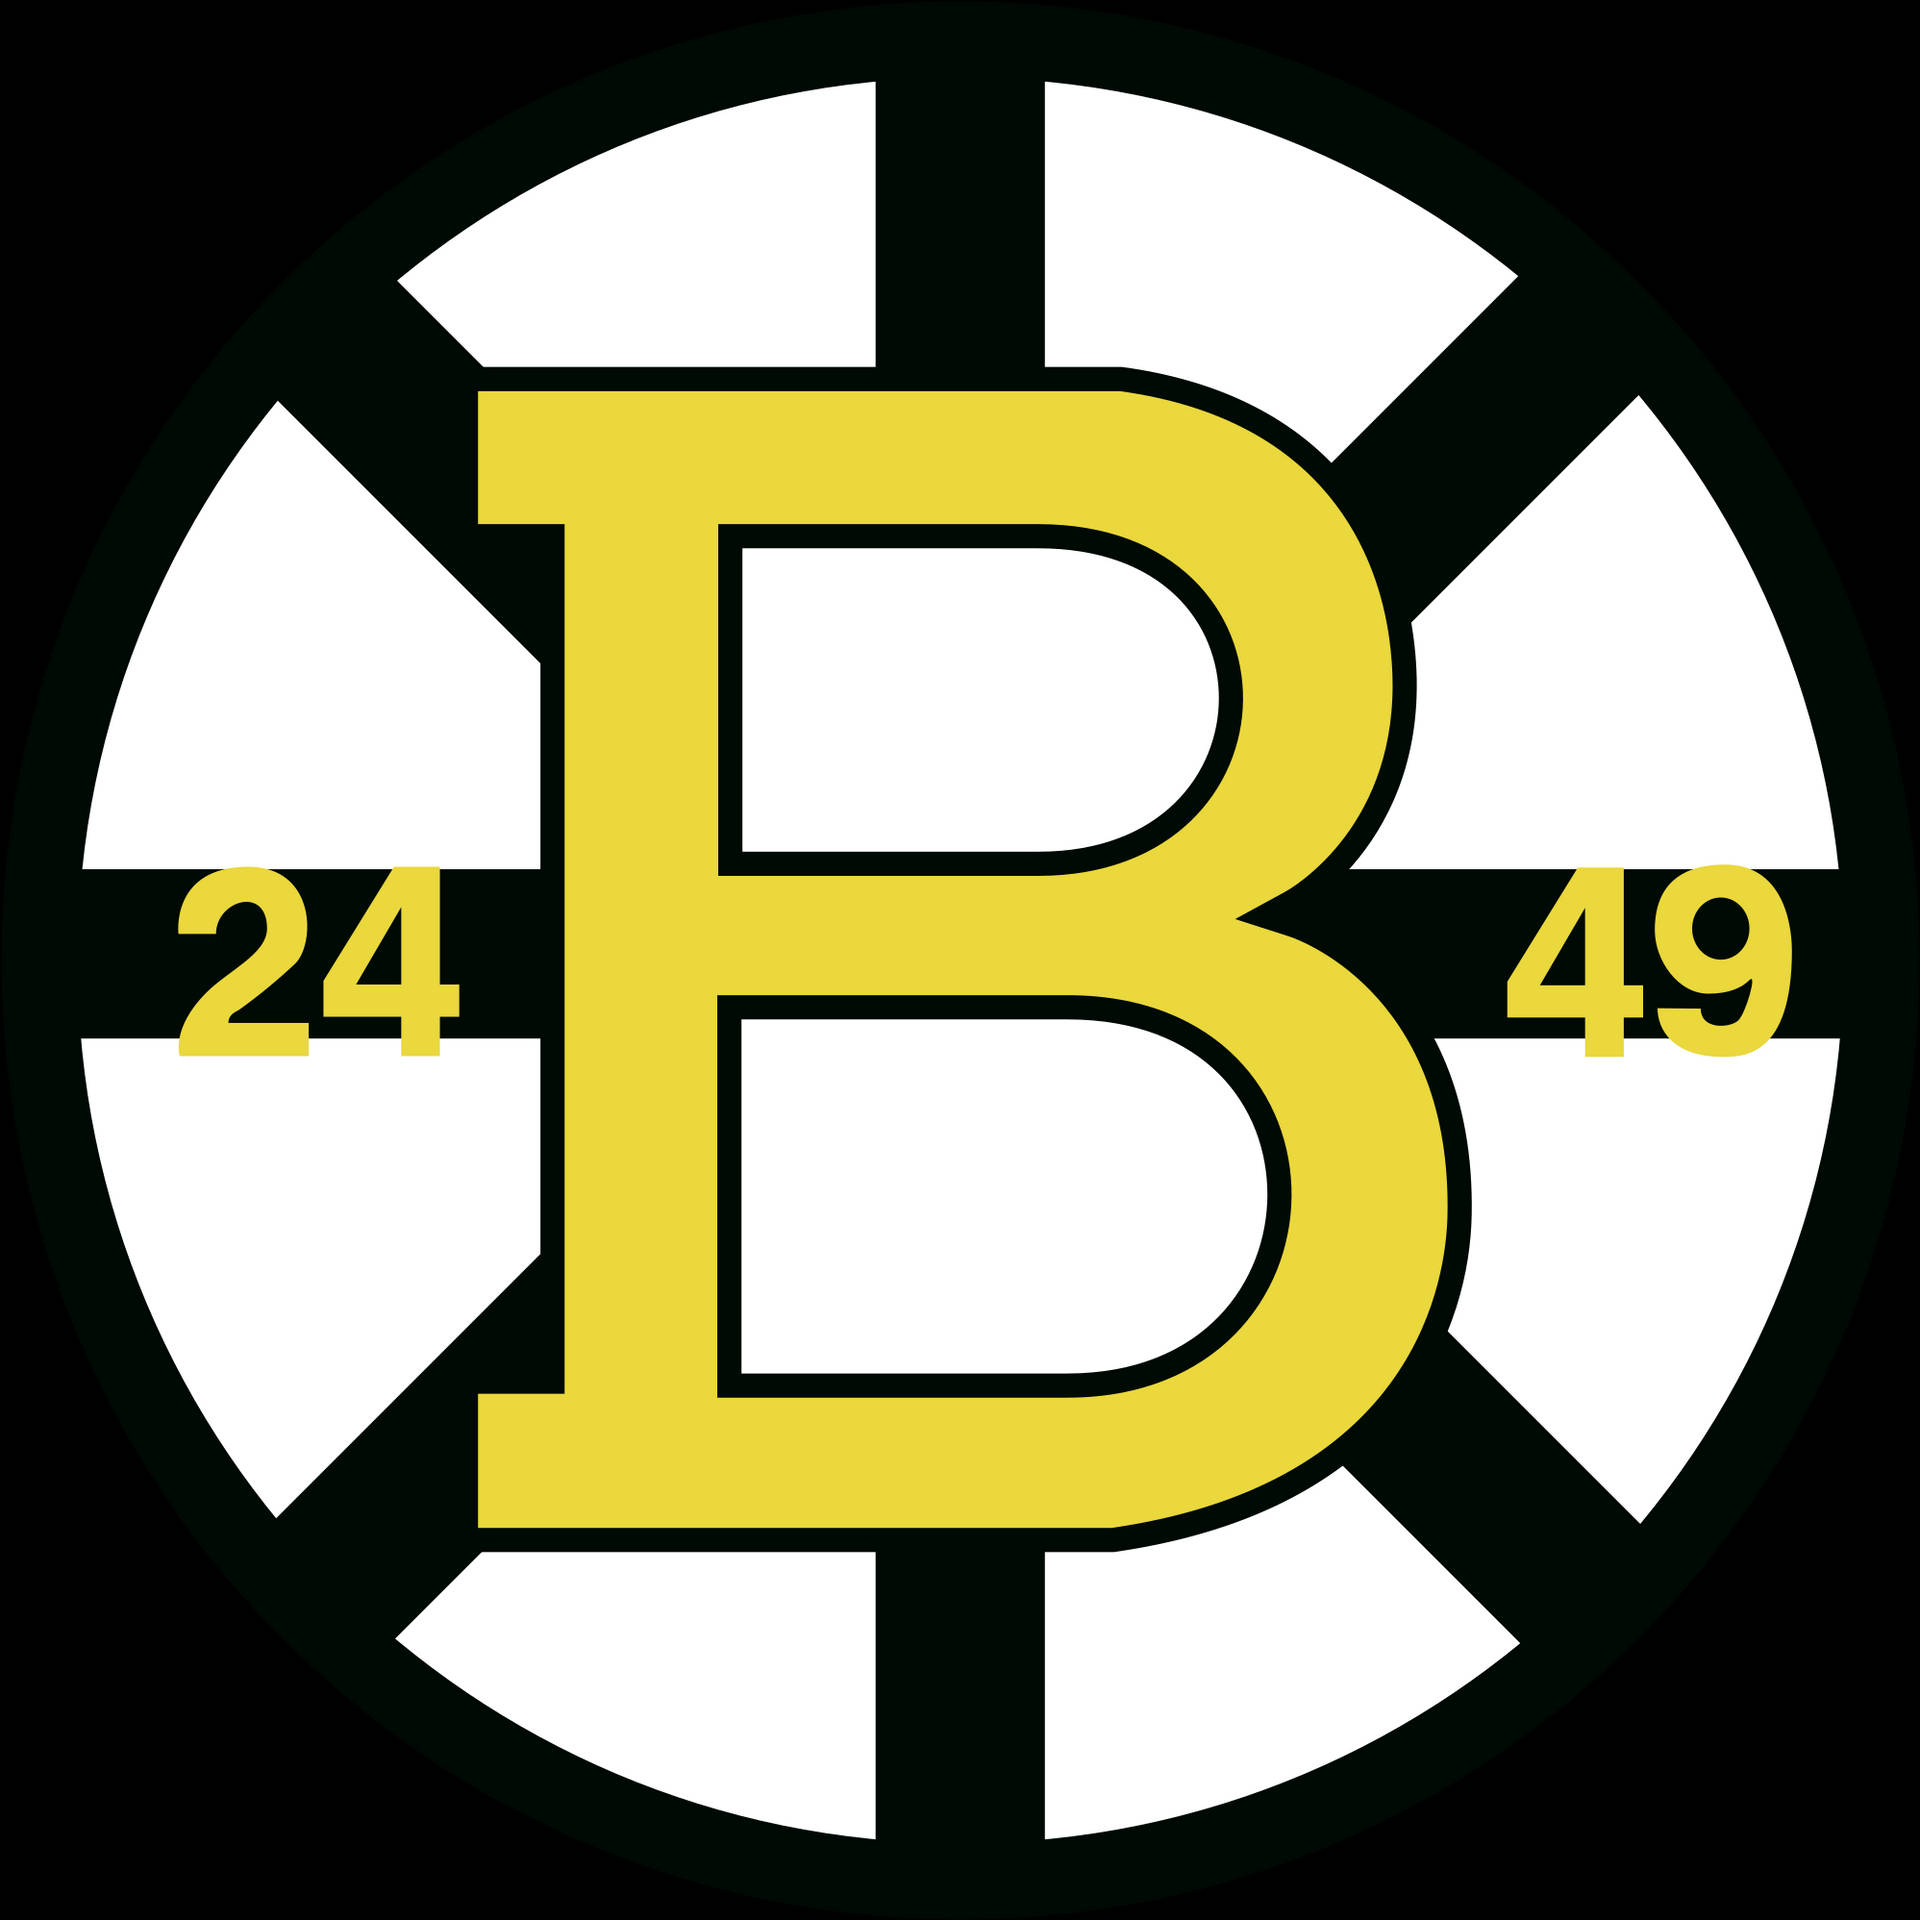 Alteslogo Der Boston Bruins Wallpaper